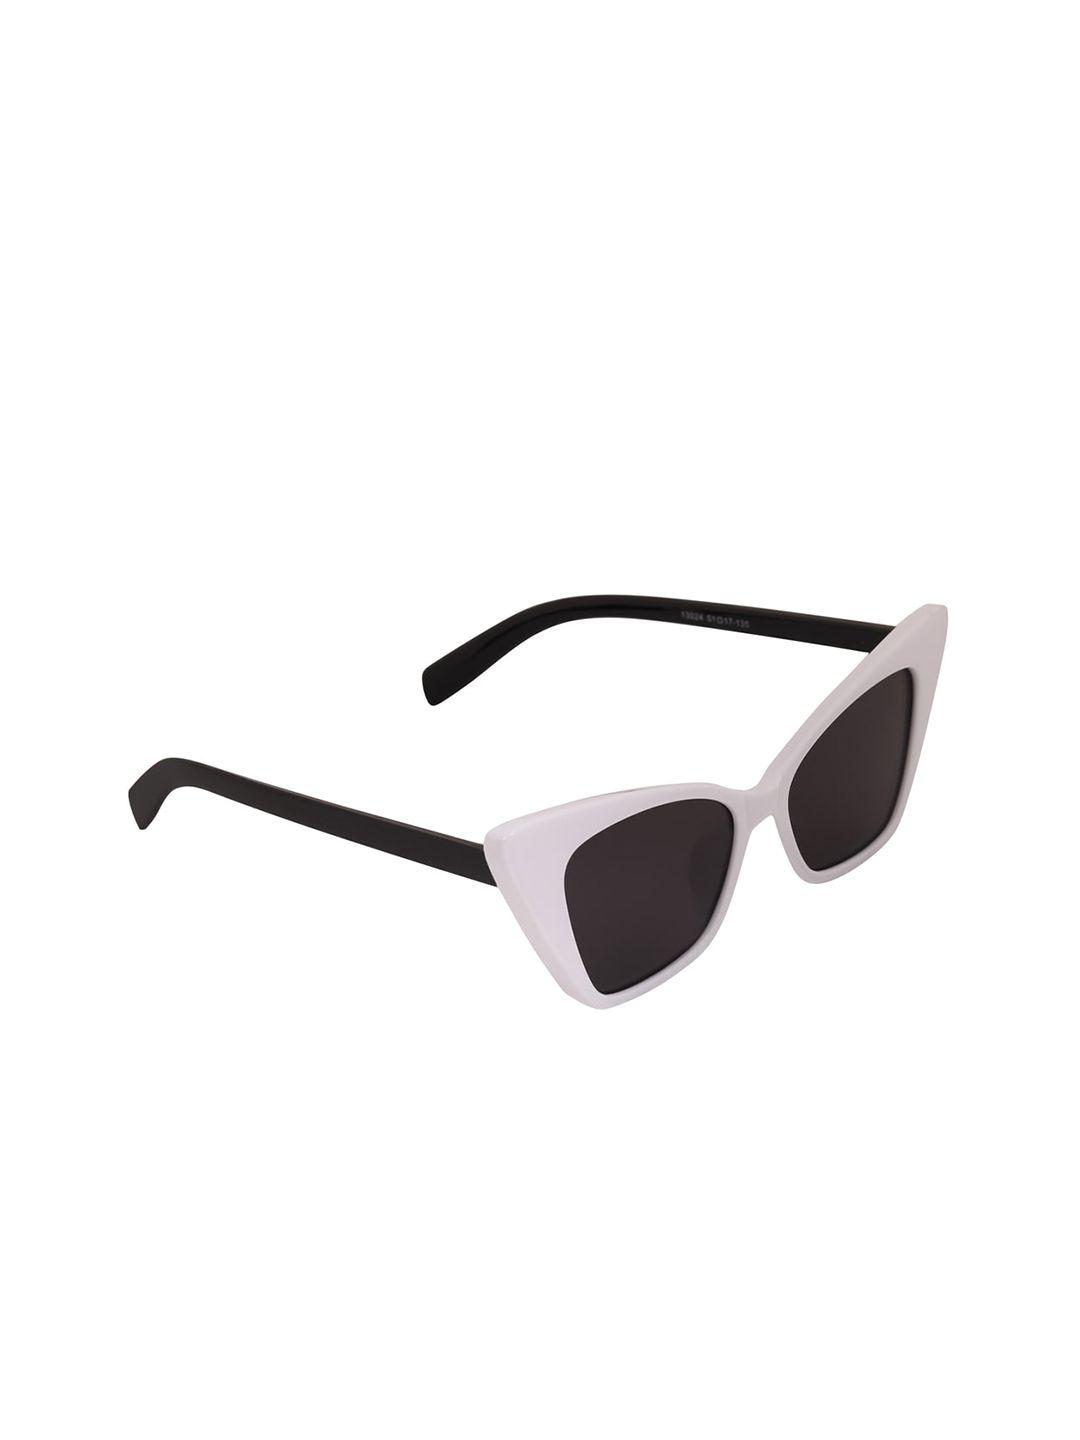 peter jones eyewear black lens & white cateye sunglasses with uv protected lens